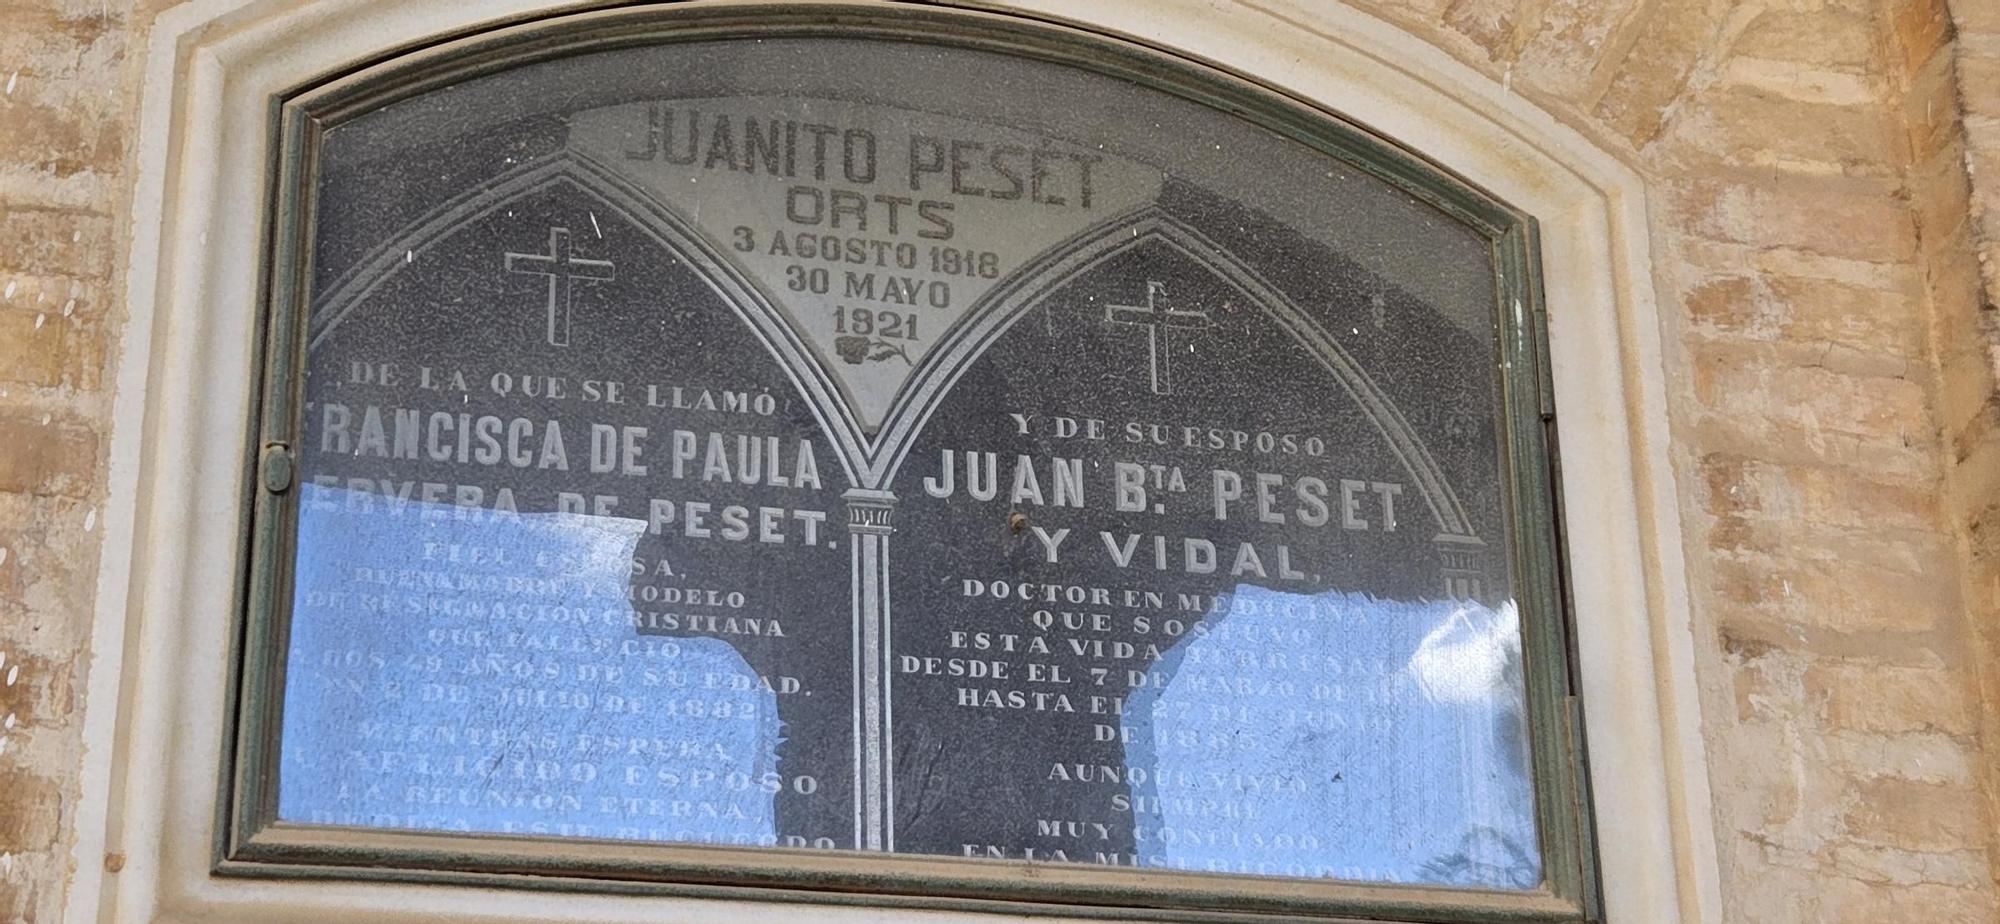 El doctor Juan Bautista Peset